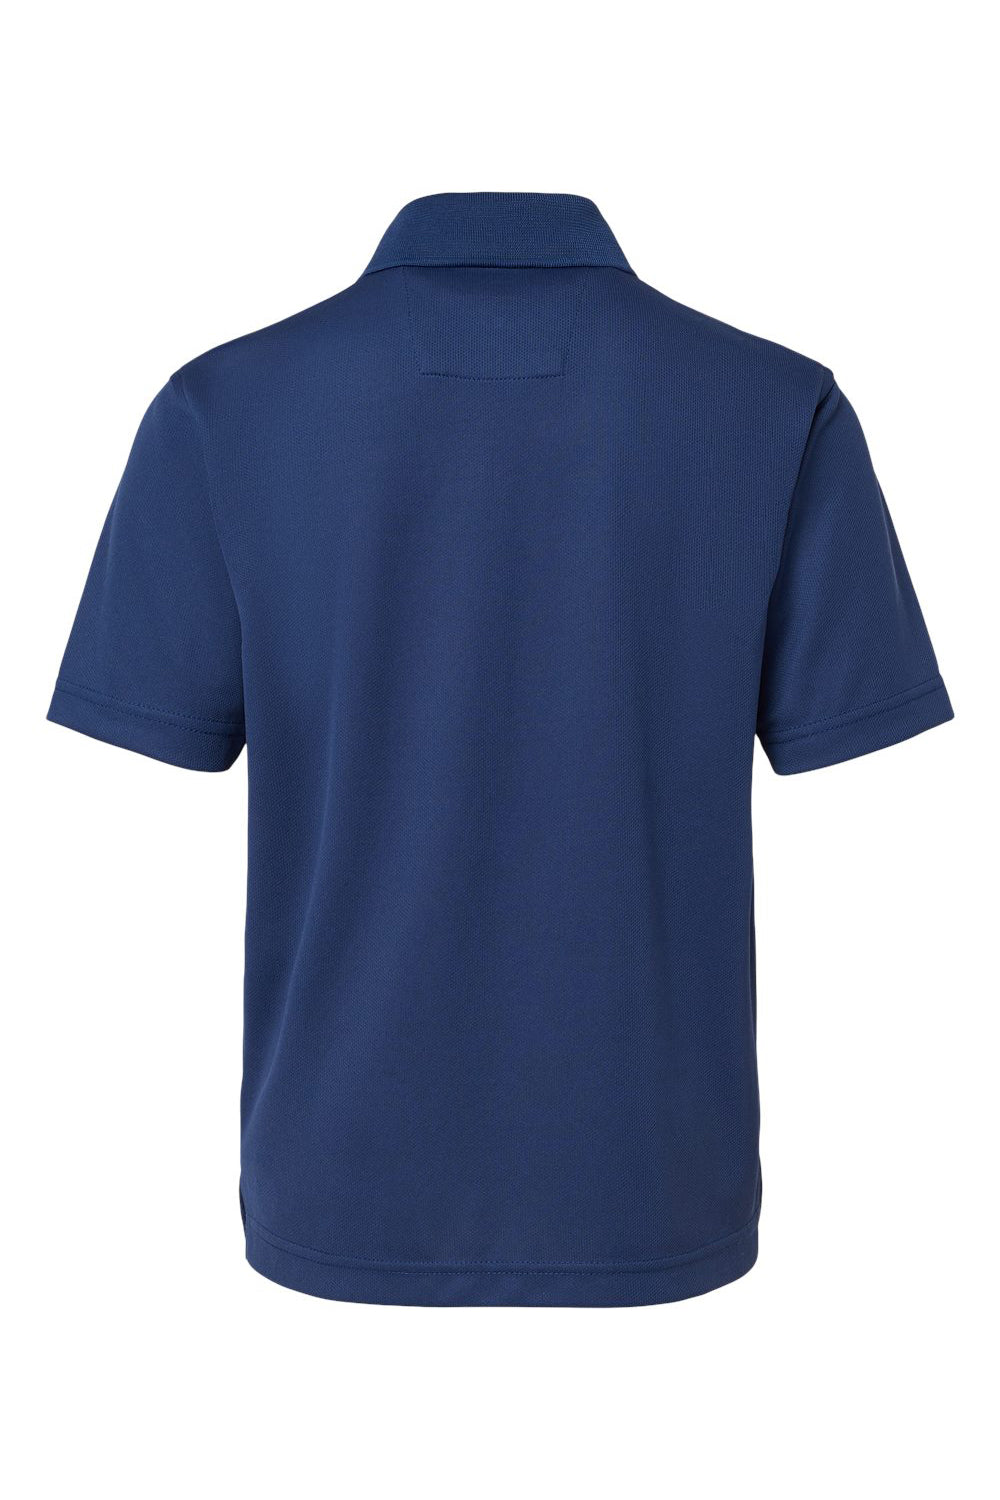 Paragon 108Y Youth Saratoga Performance Mini Mesh Short Sleeve Polo Shirt Navy Blue Flat Back